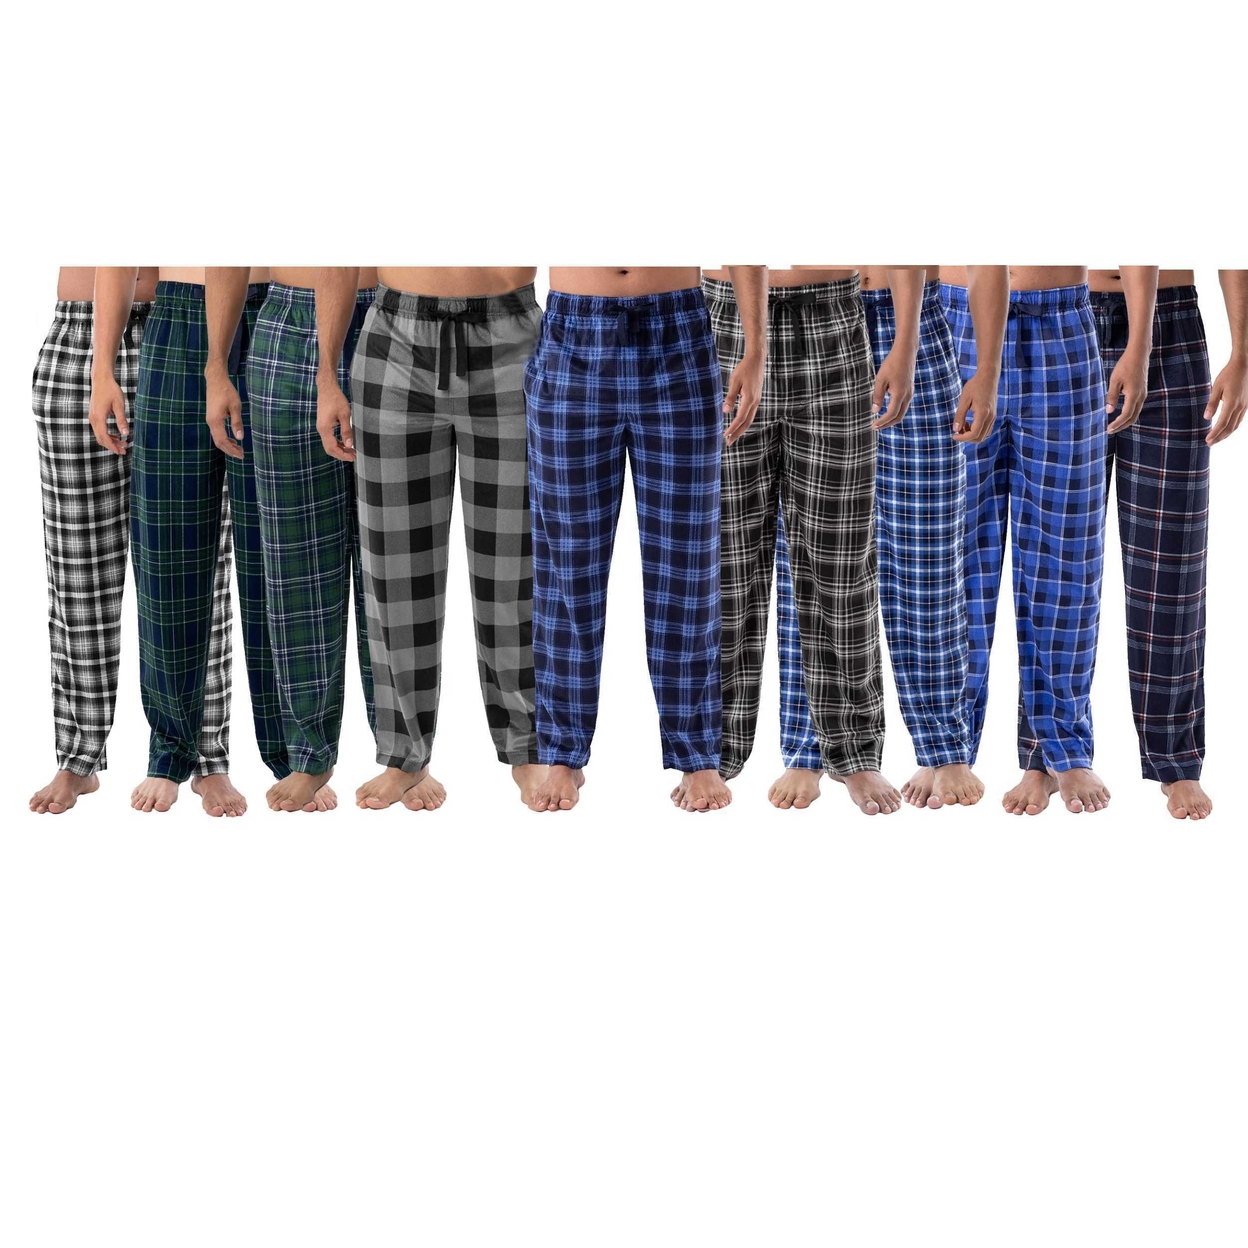 4-Pack: Men's Ultra-Soft Cozy Lounge Sleep Micro Fleece Plaid Pajama Pants - X-large